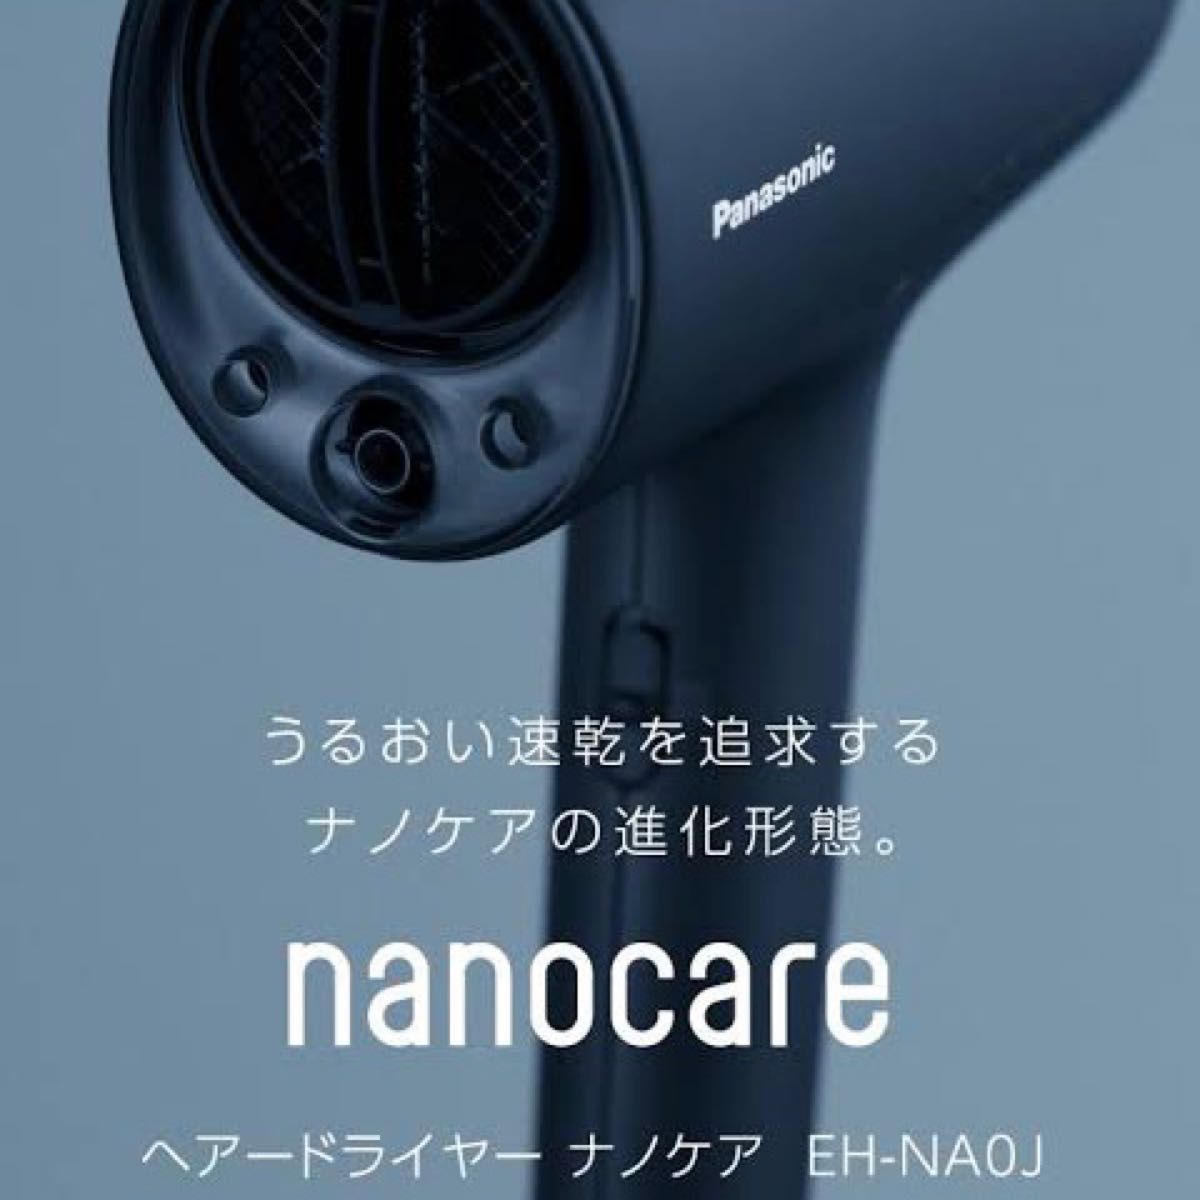 Panasonic ヘアードライヤー nanocare EH-NA0Jネイビー Yahoo!フリマ